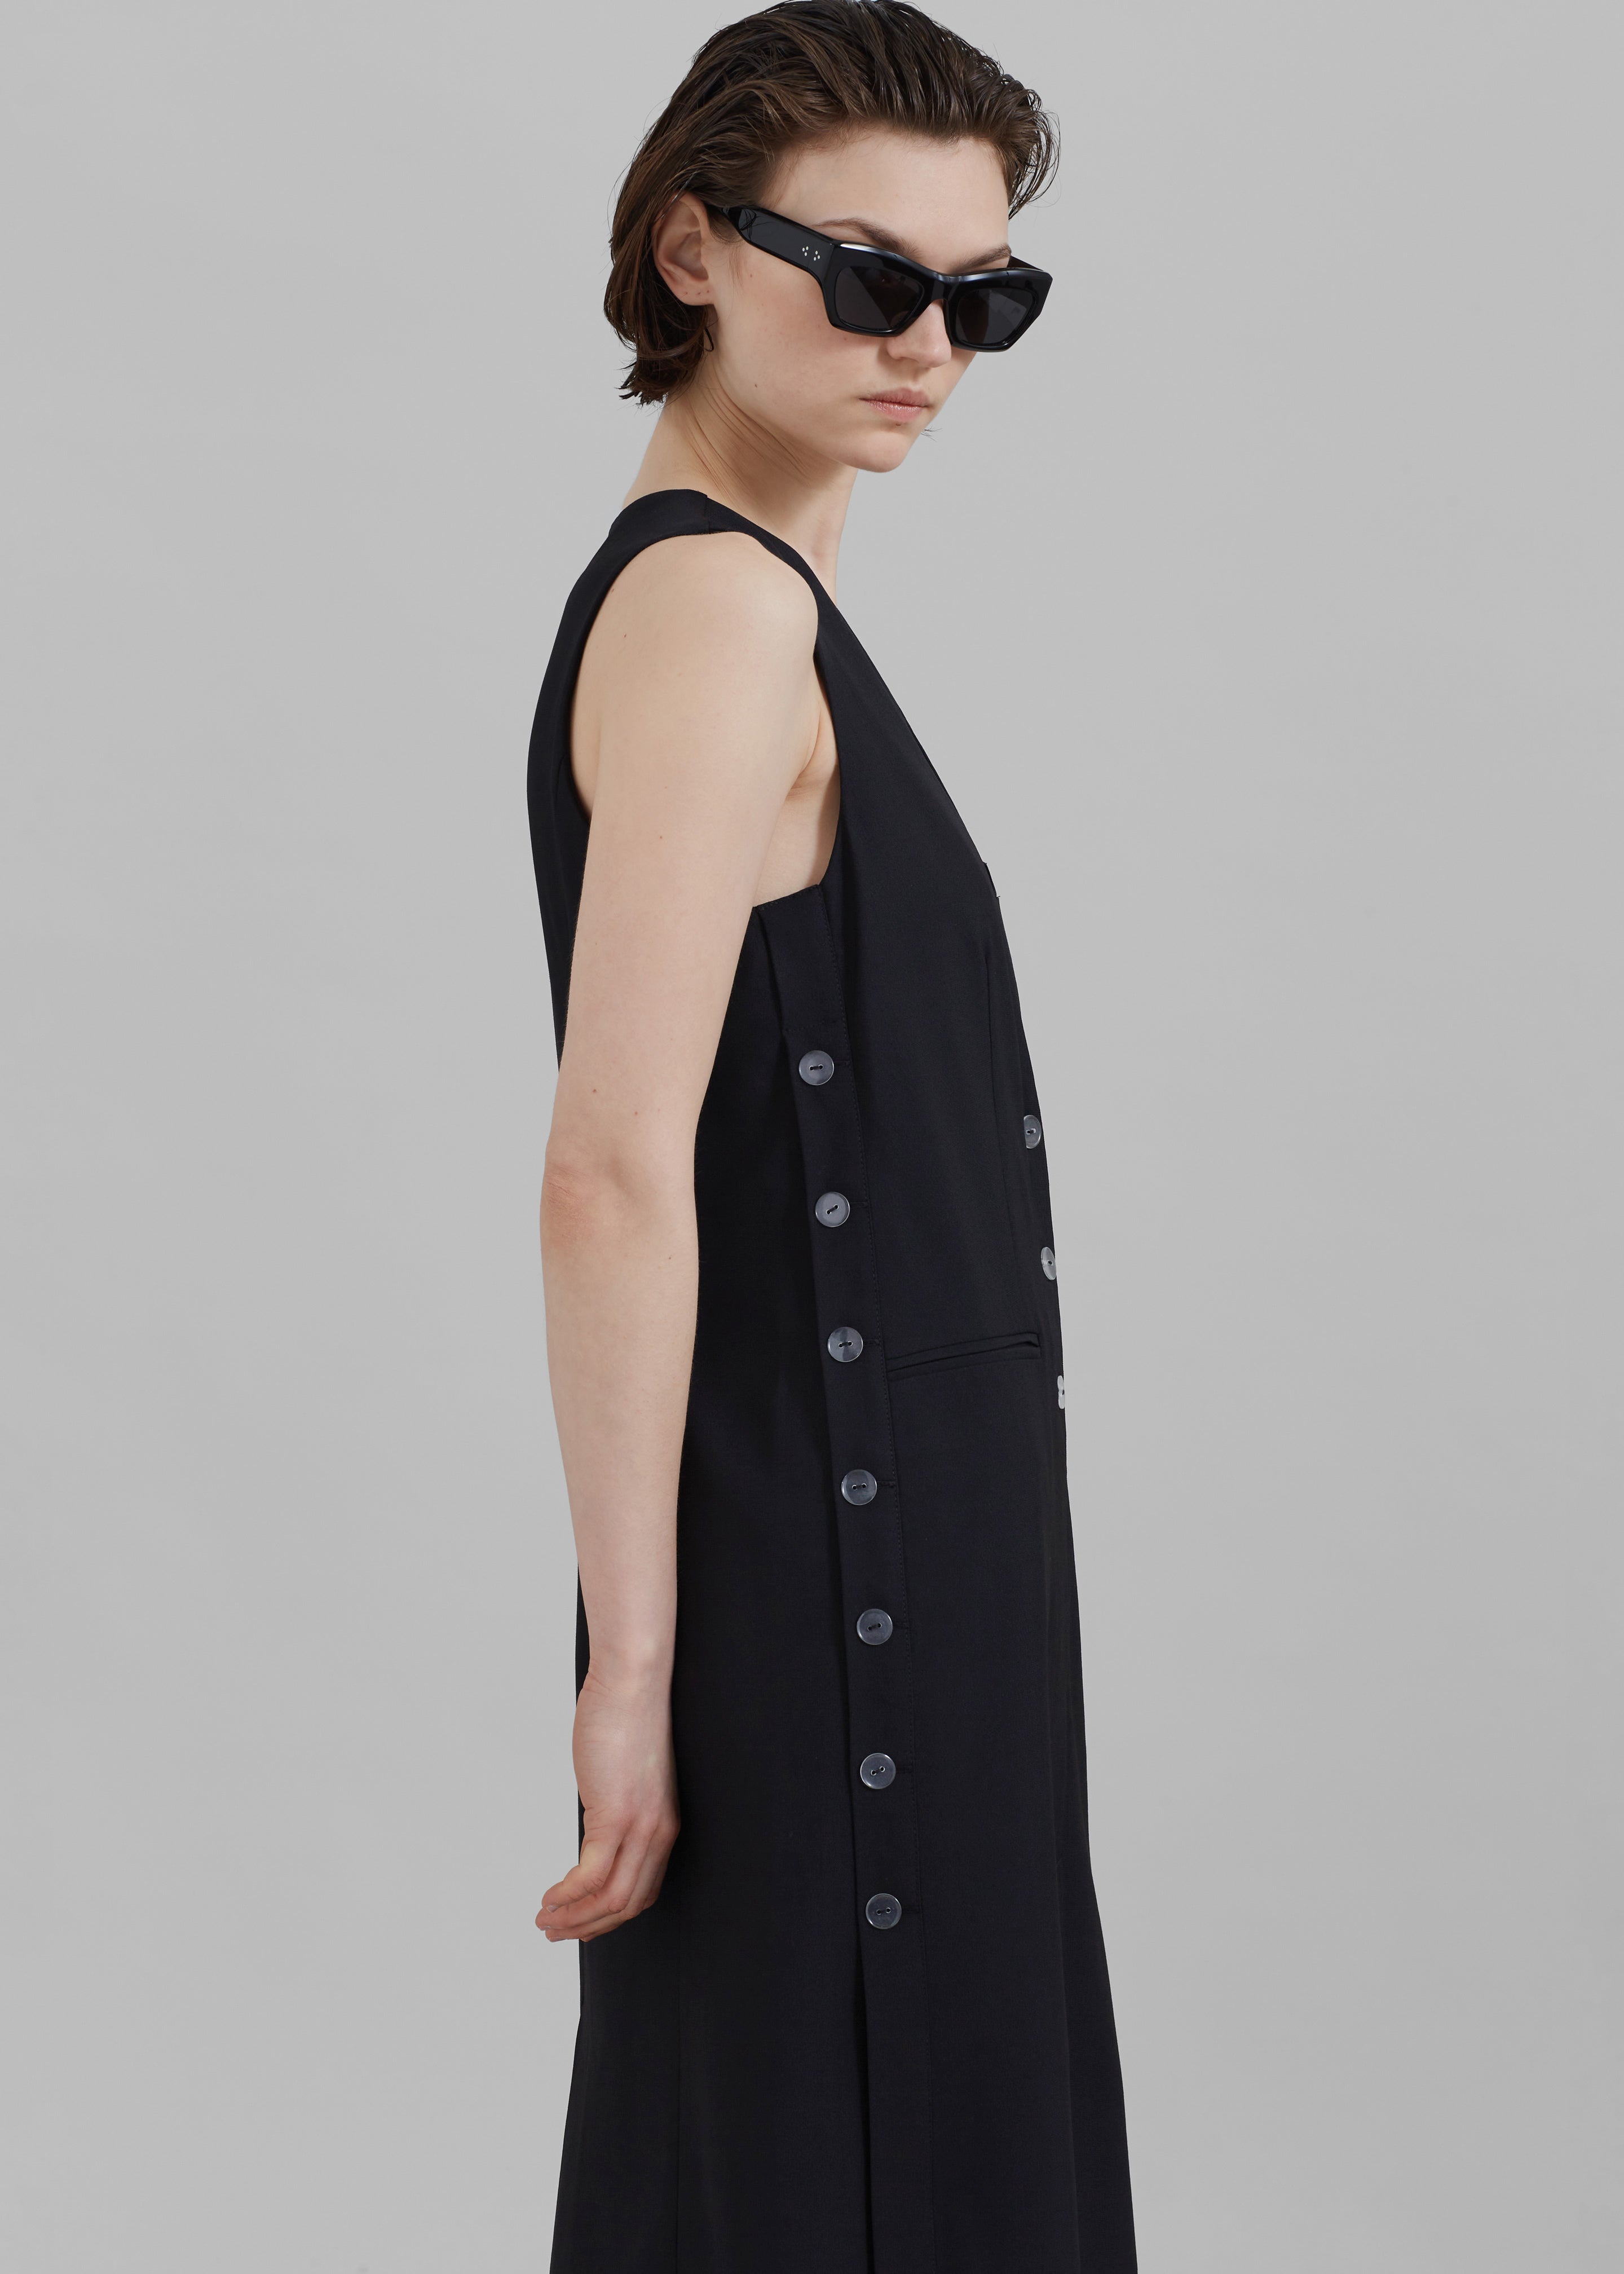 3.1 Phillip Lim Tailored Vest Dress with Set-In Bra - Black - 5